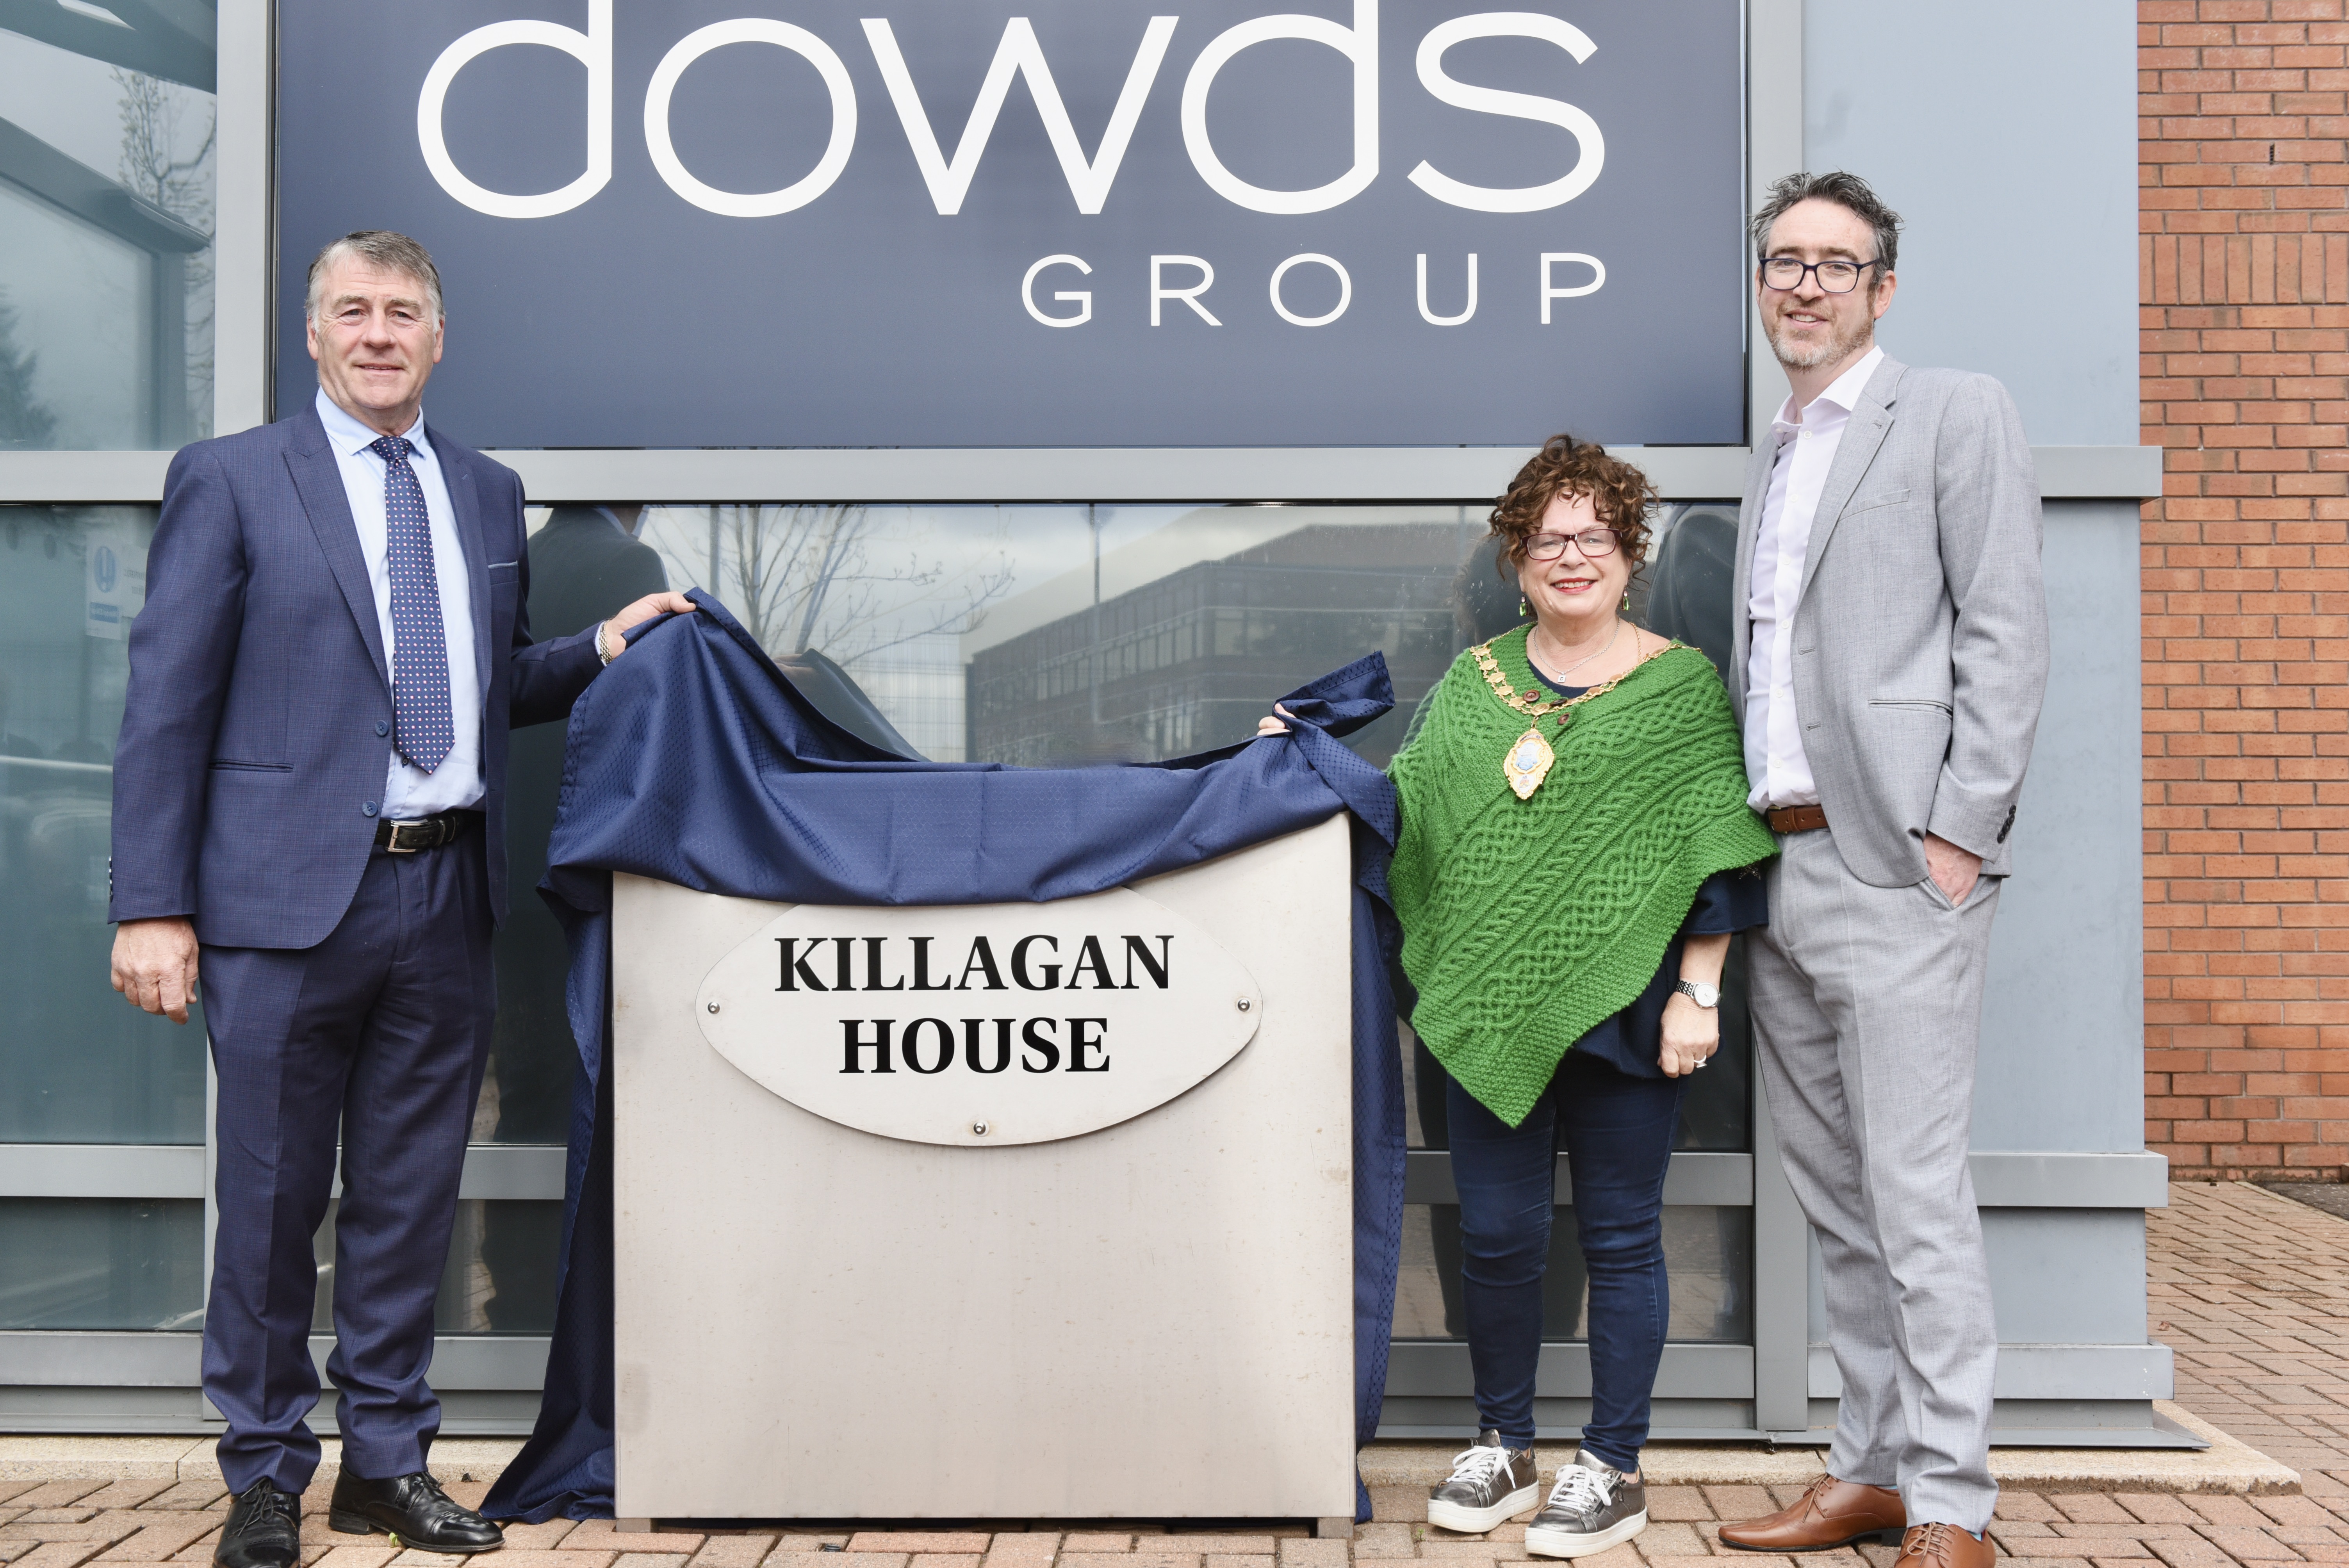 Mayor Welcomes Dowds Group to Ballymena